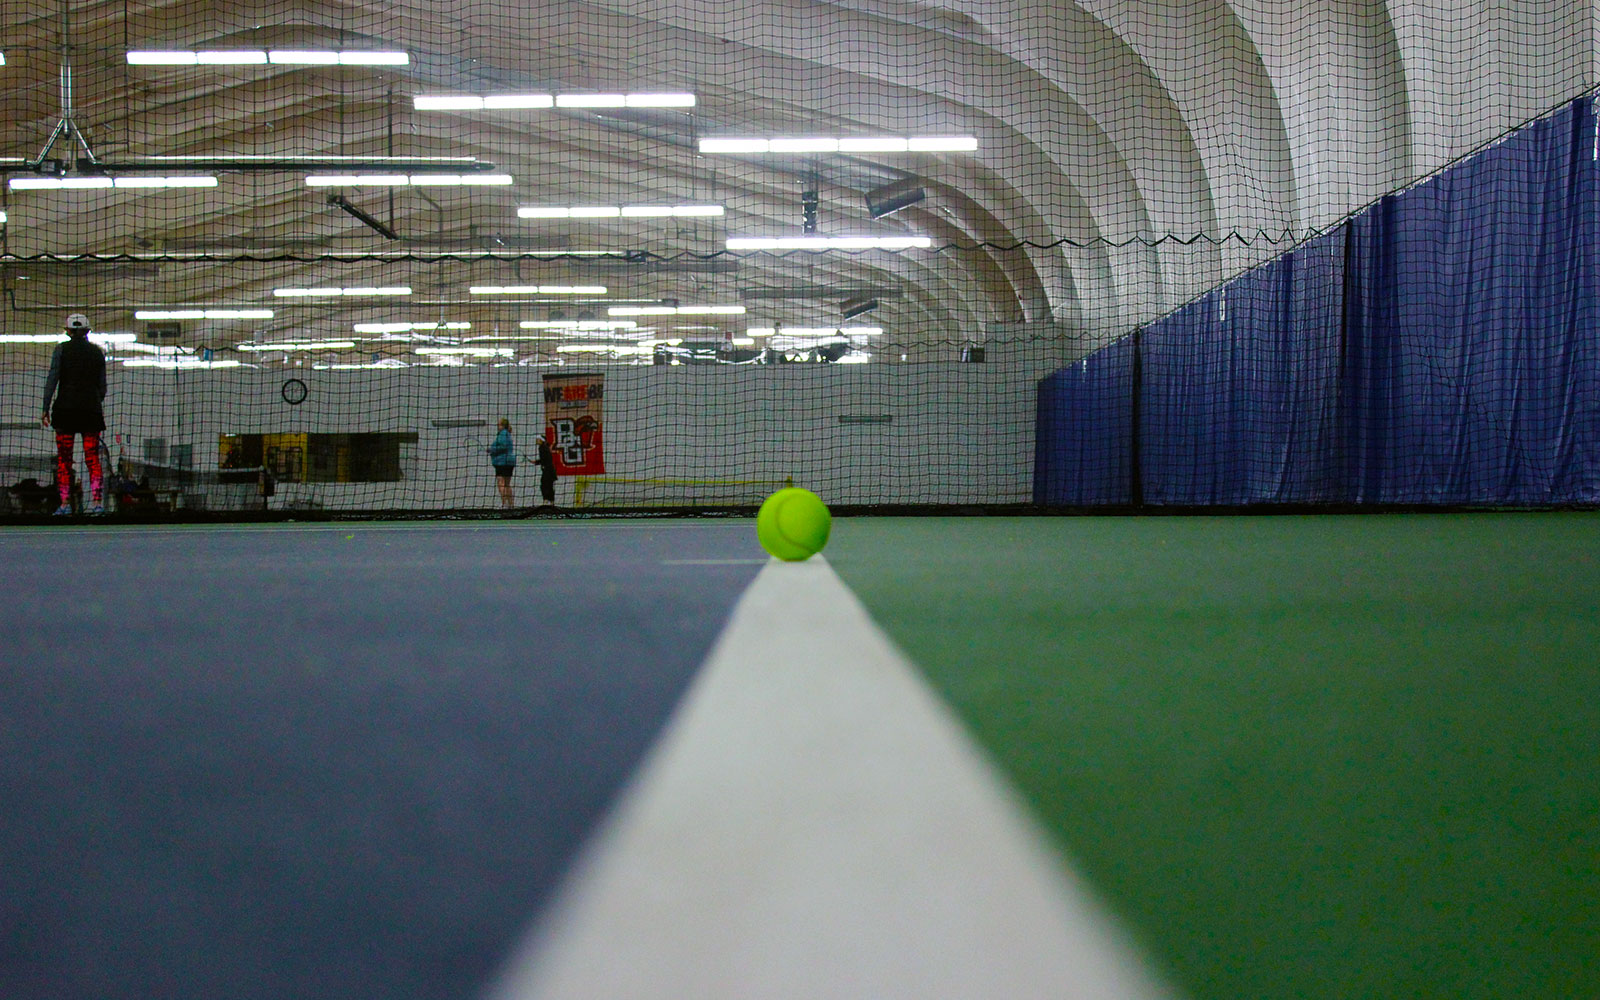 tennis ball on line